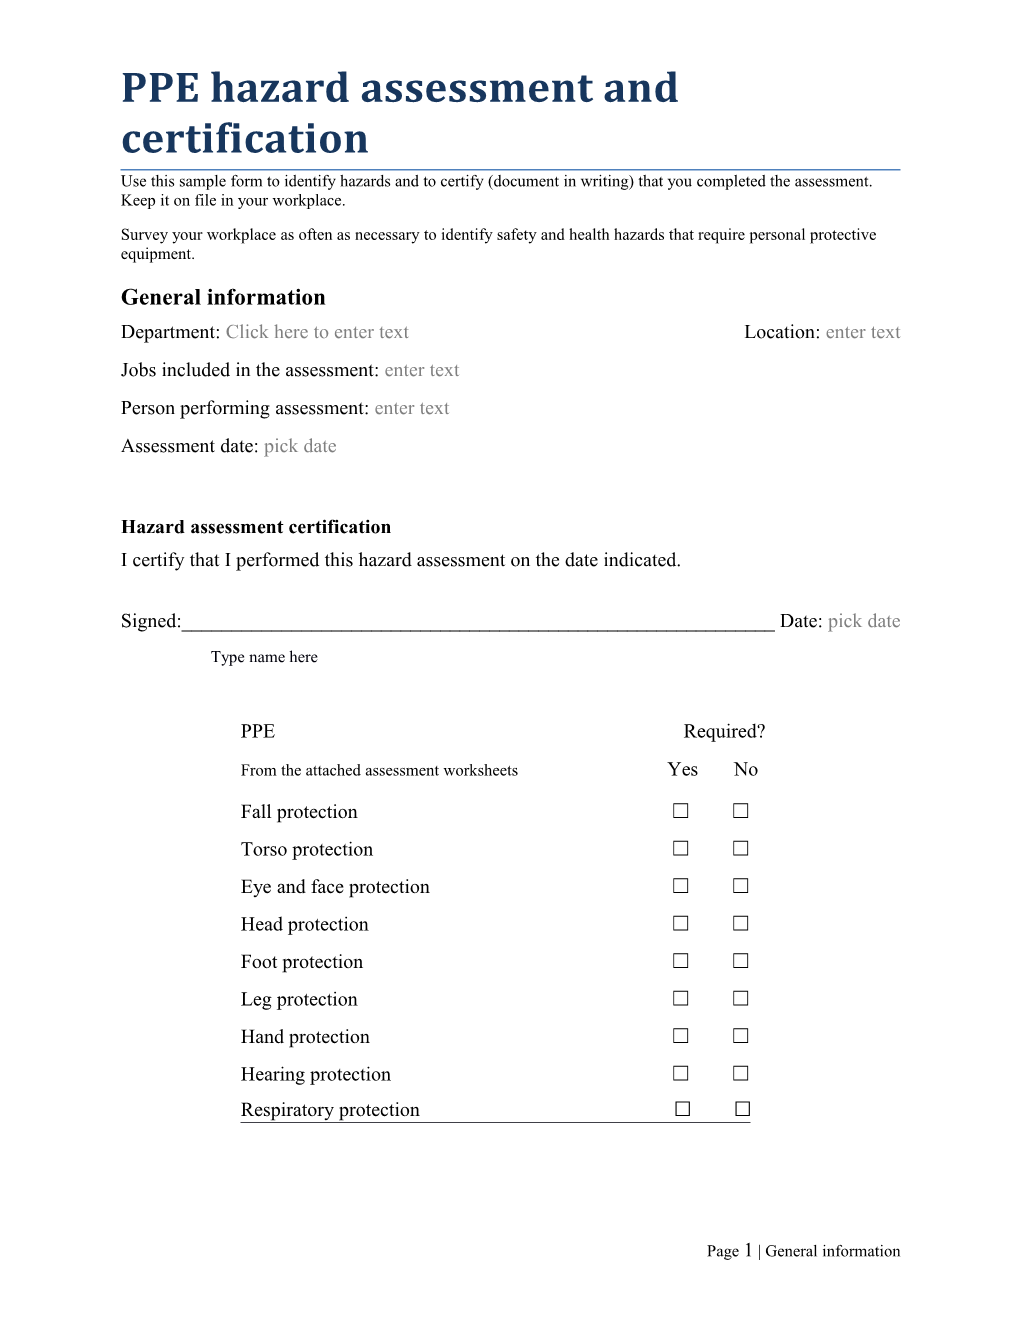 PPE Hazard Assessment Form (Docx)